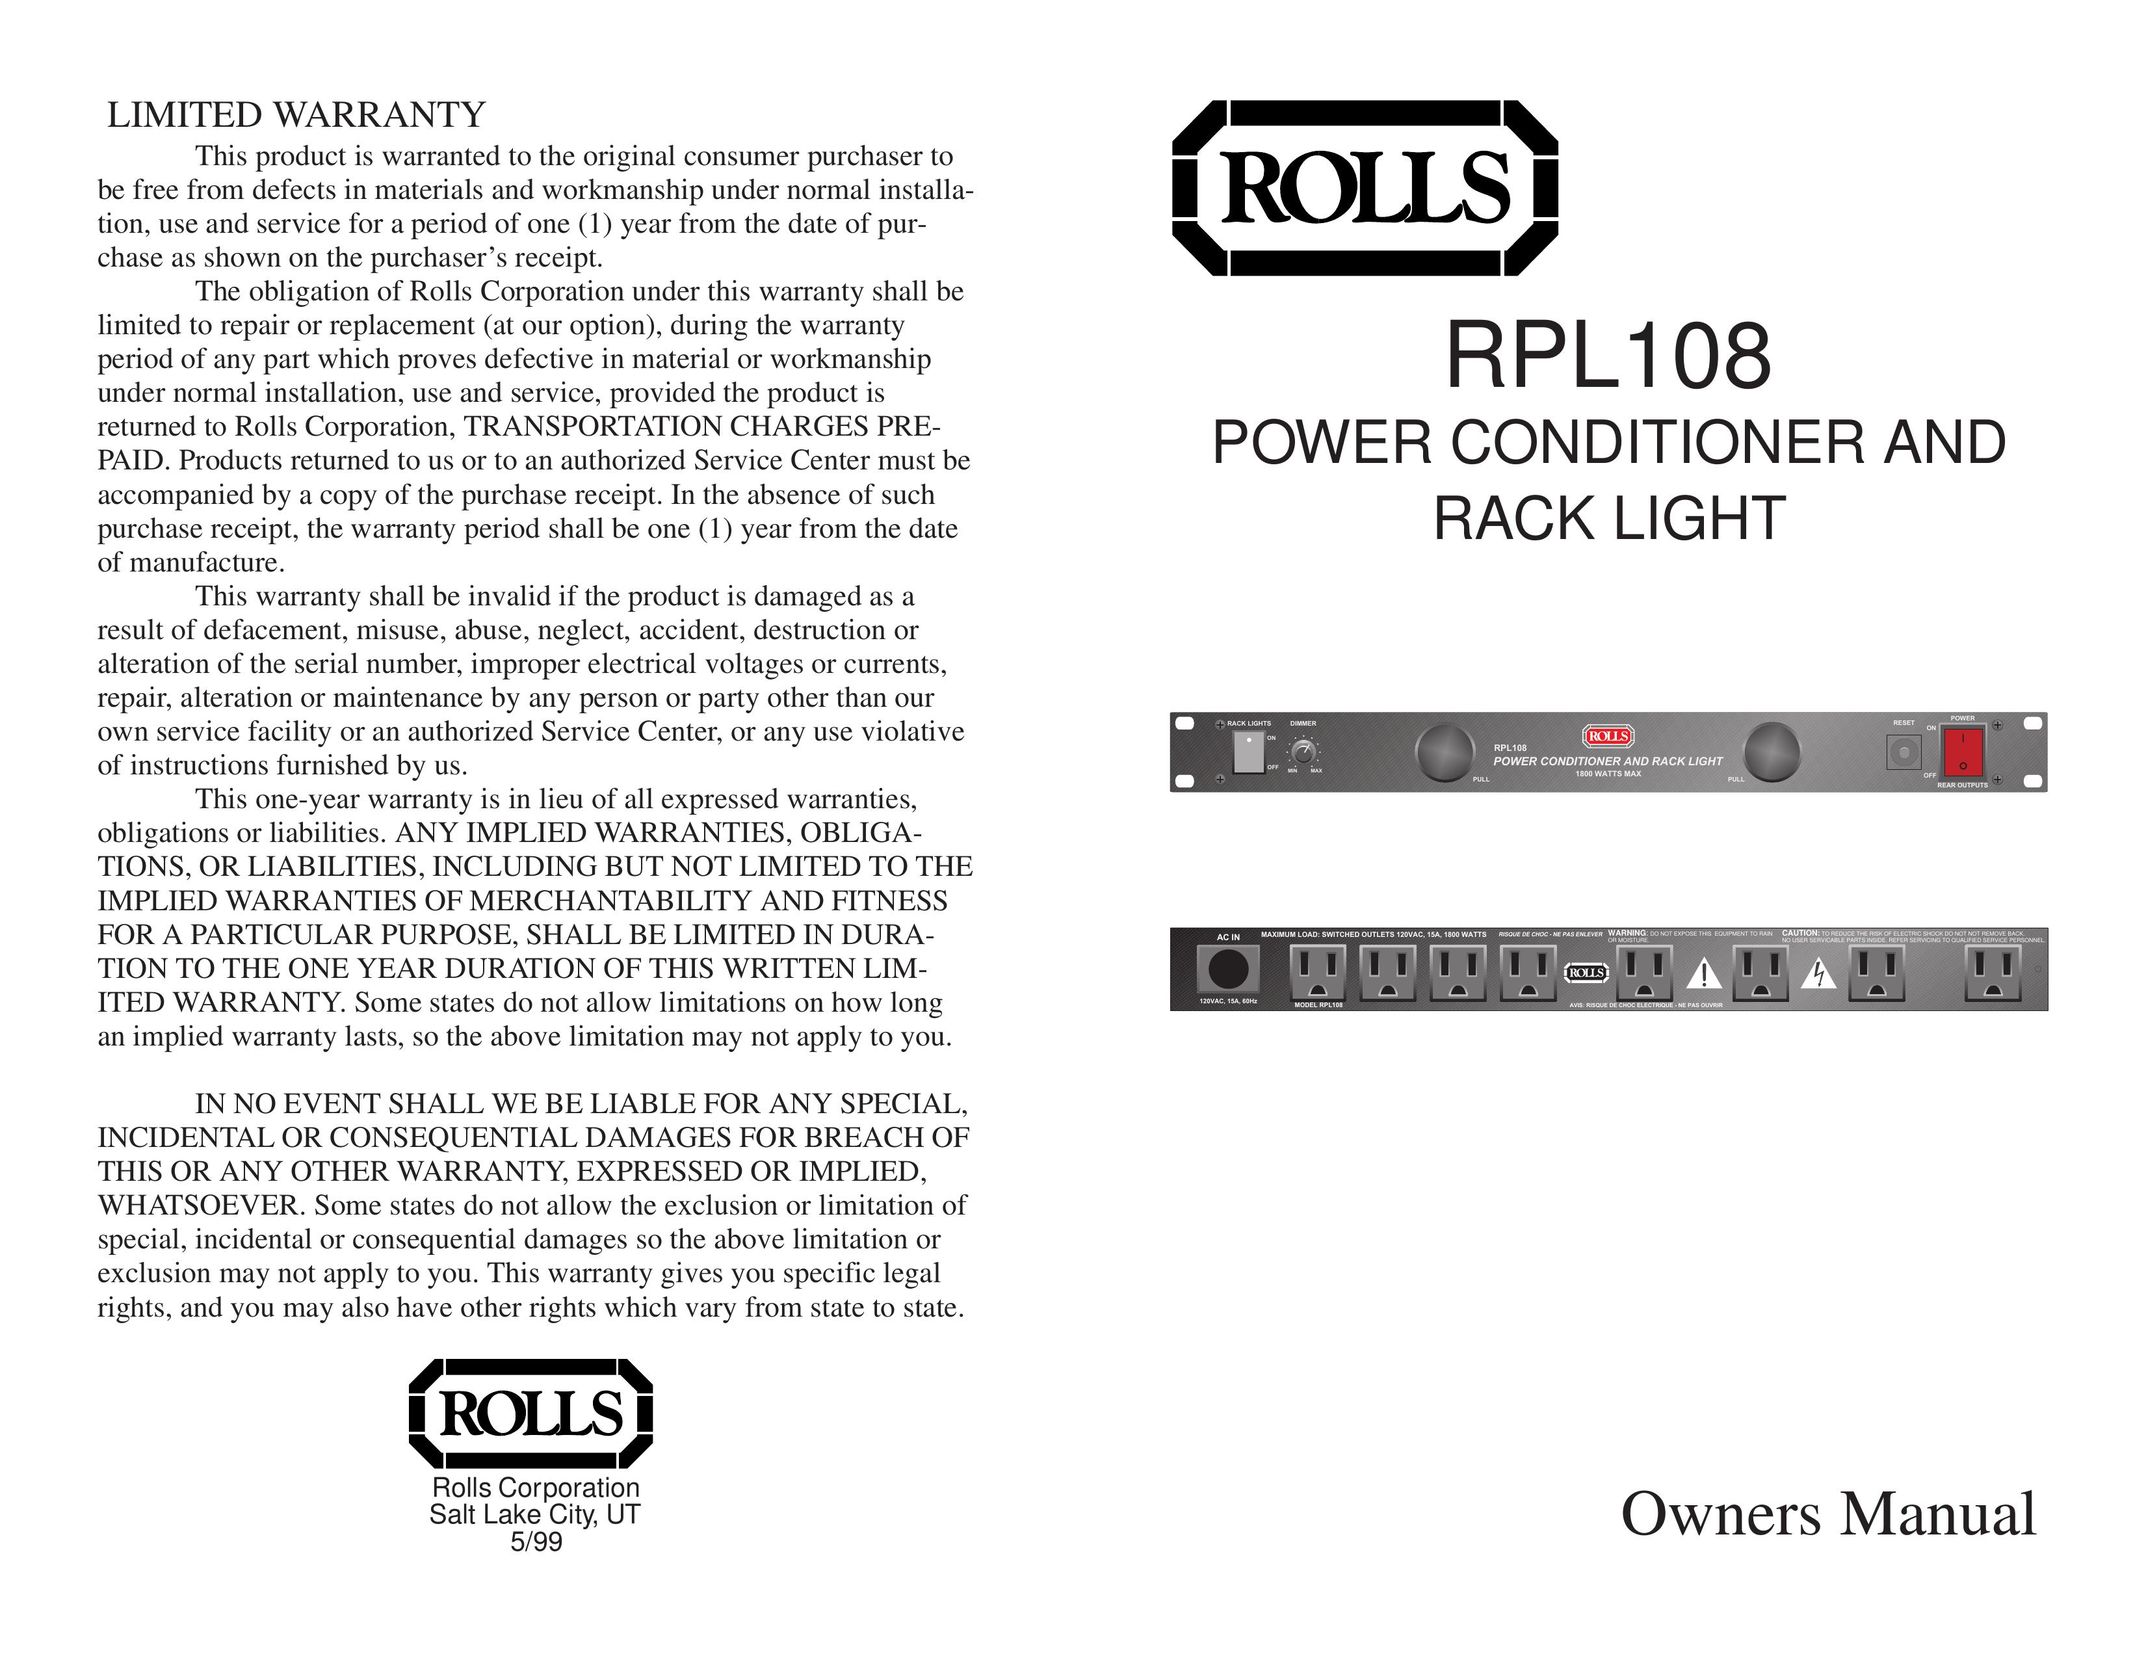 Rolls RPL108 Power Supply User Manual